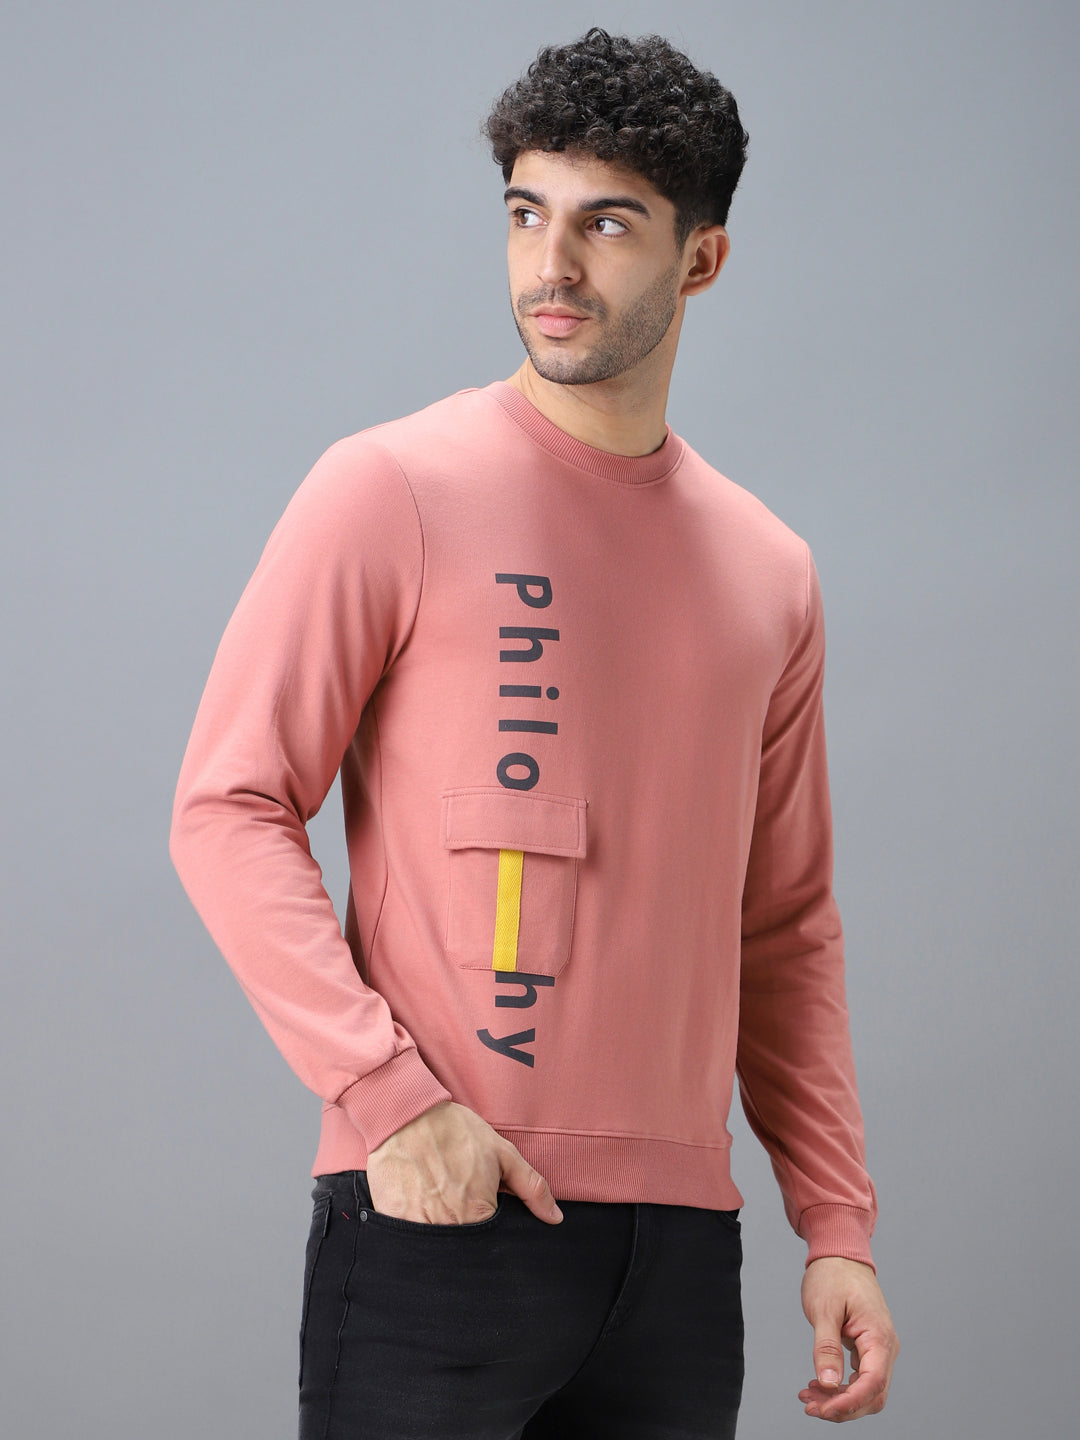 Urbano Fashion Men's Pink Cotton Graphic Print Round Neck Sweatshirt